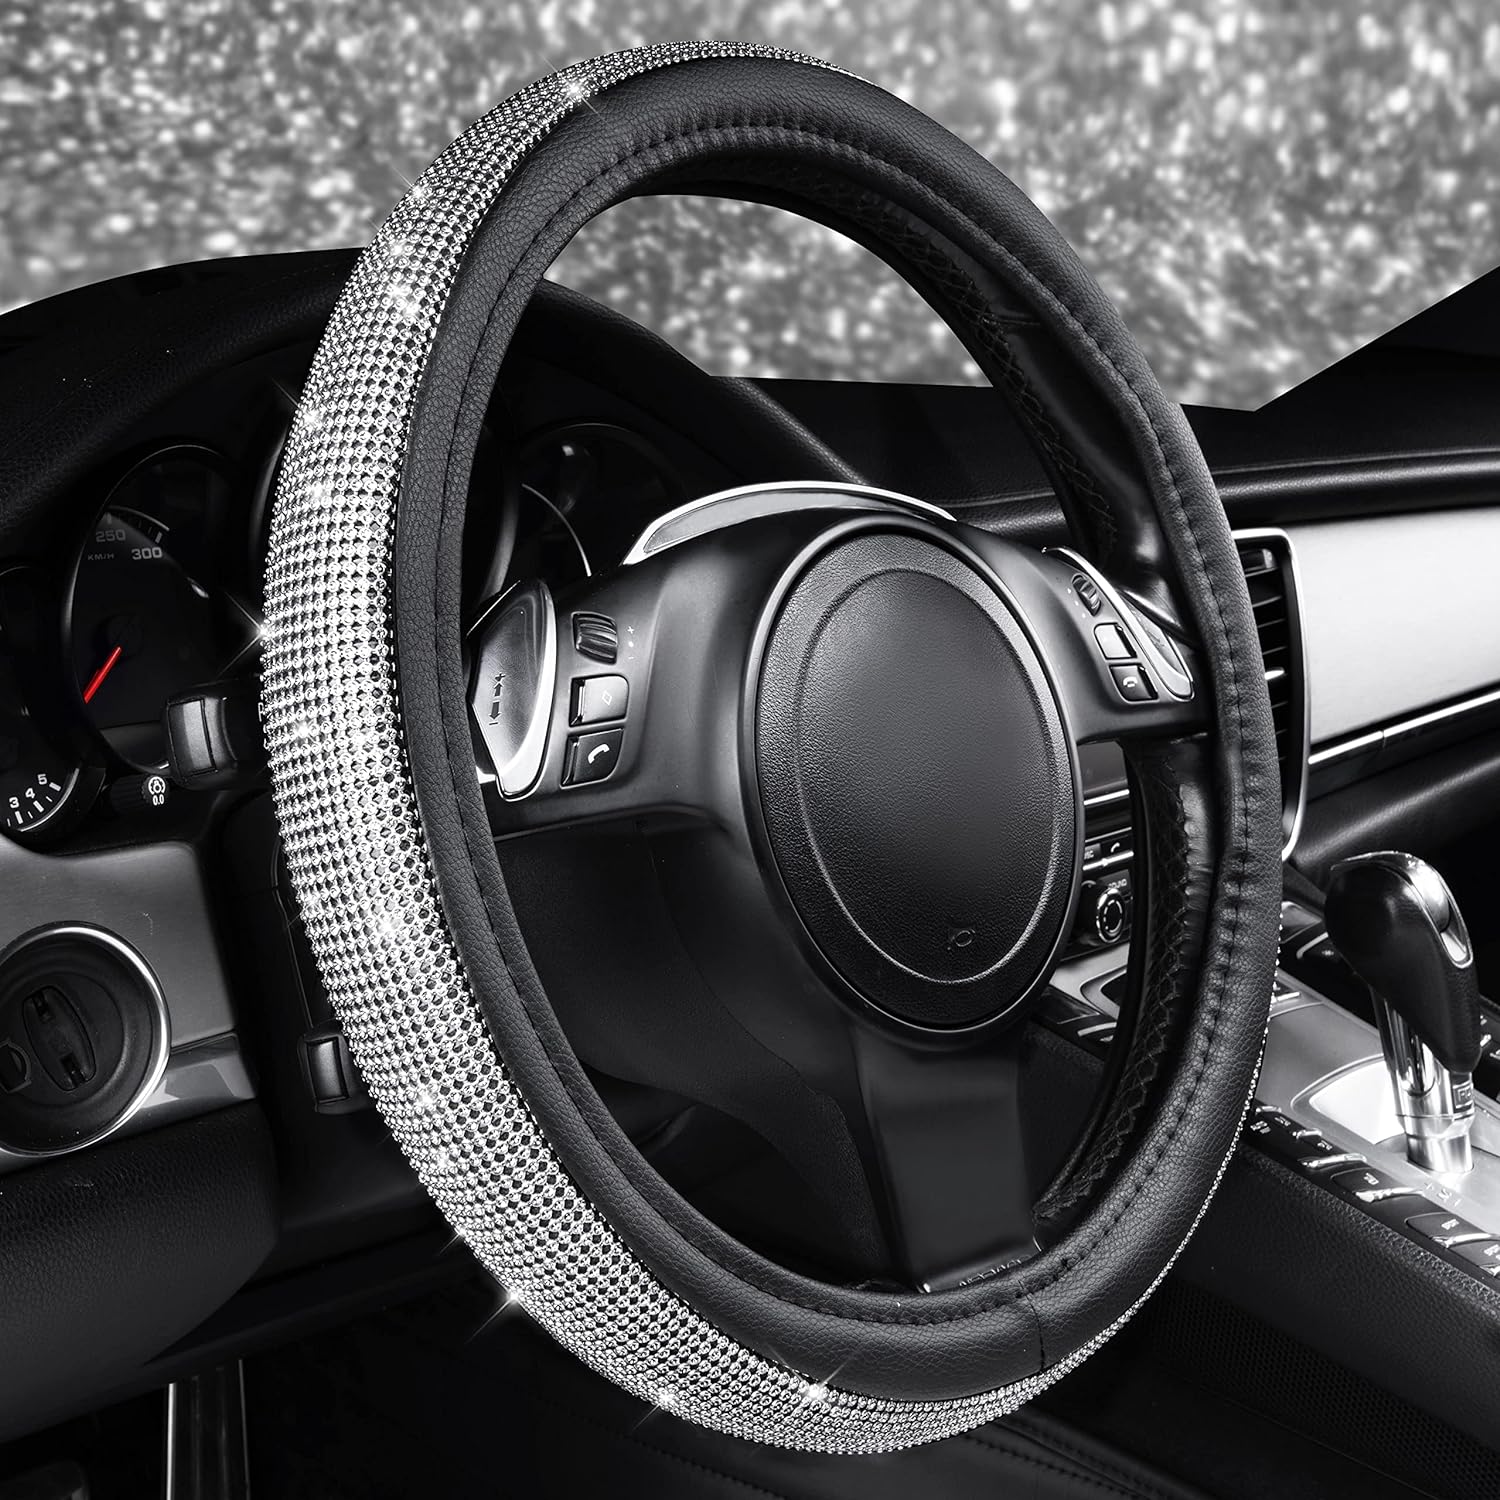 Bling Diamond Leather Steering Wheel Cover, with Sparkly Crystal Glitter Rhinestones Universal Fit 14" 1/2-15" Car Wheel Protector for Women Girl Fit Suvs,Vans,Sedans,Car,Trucks